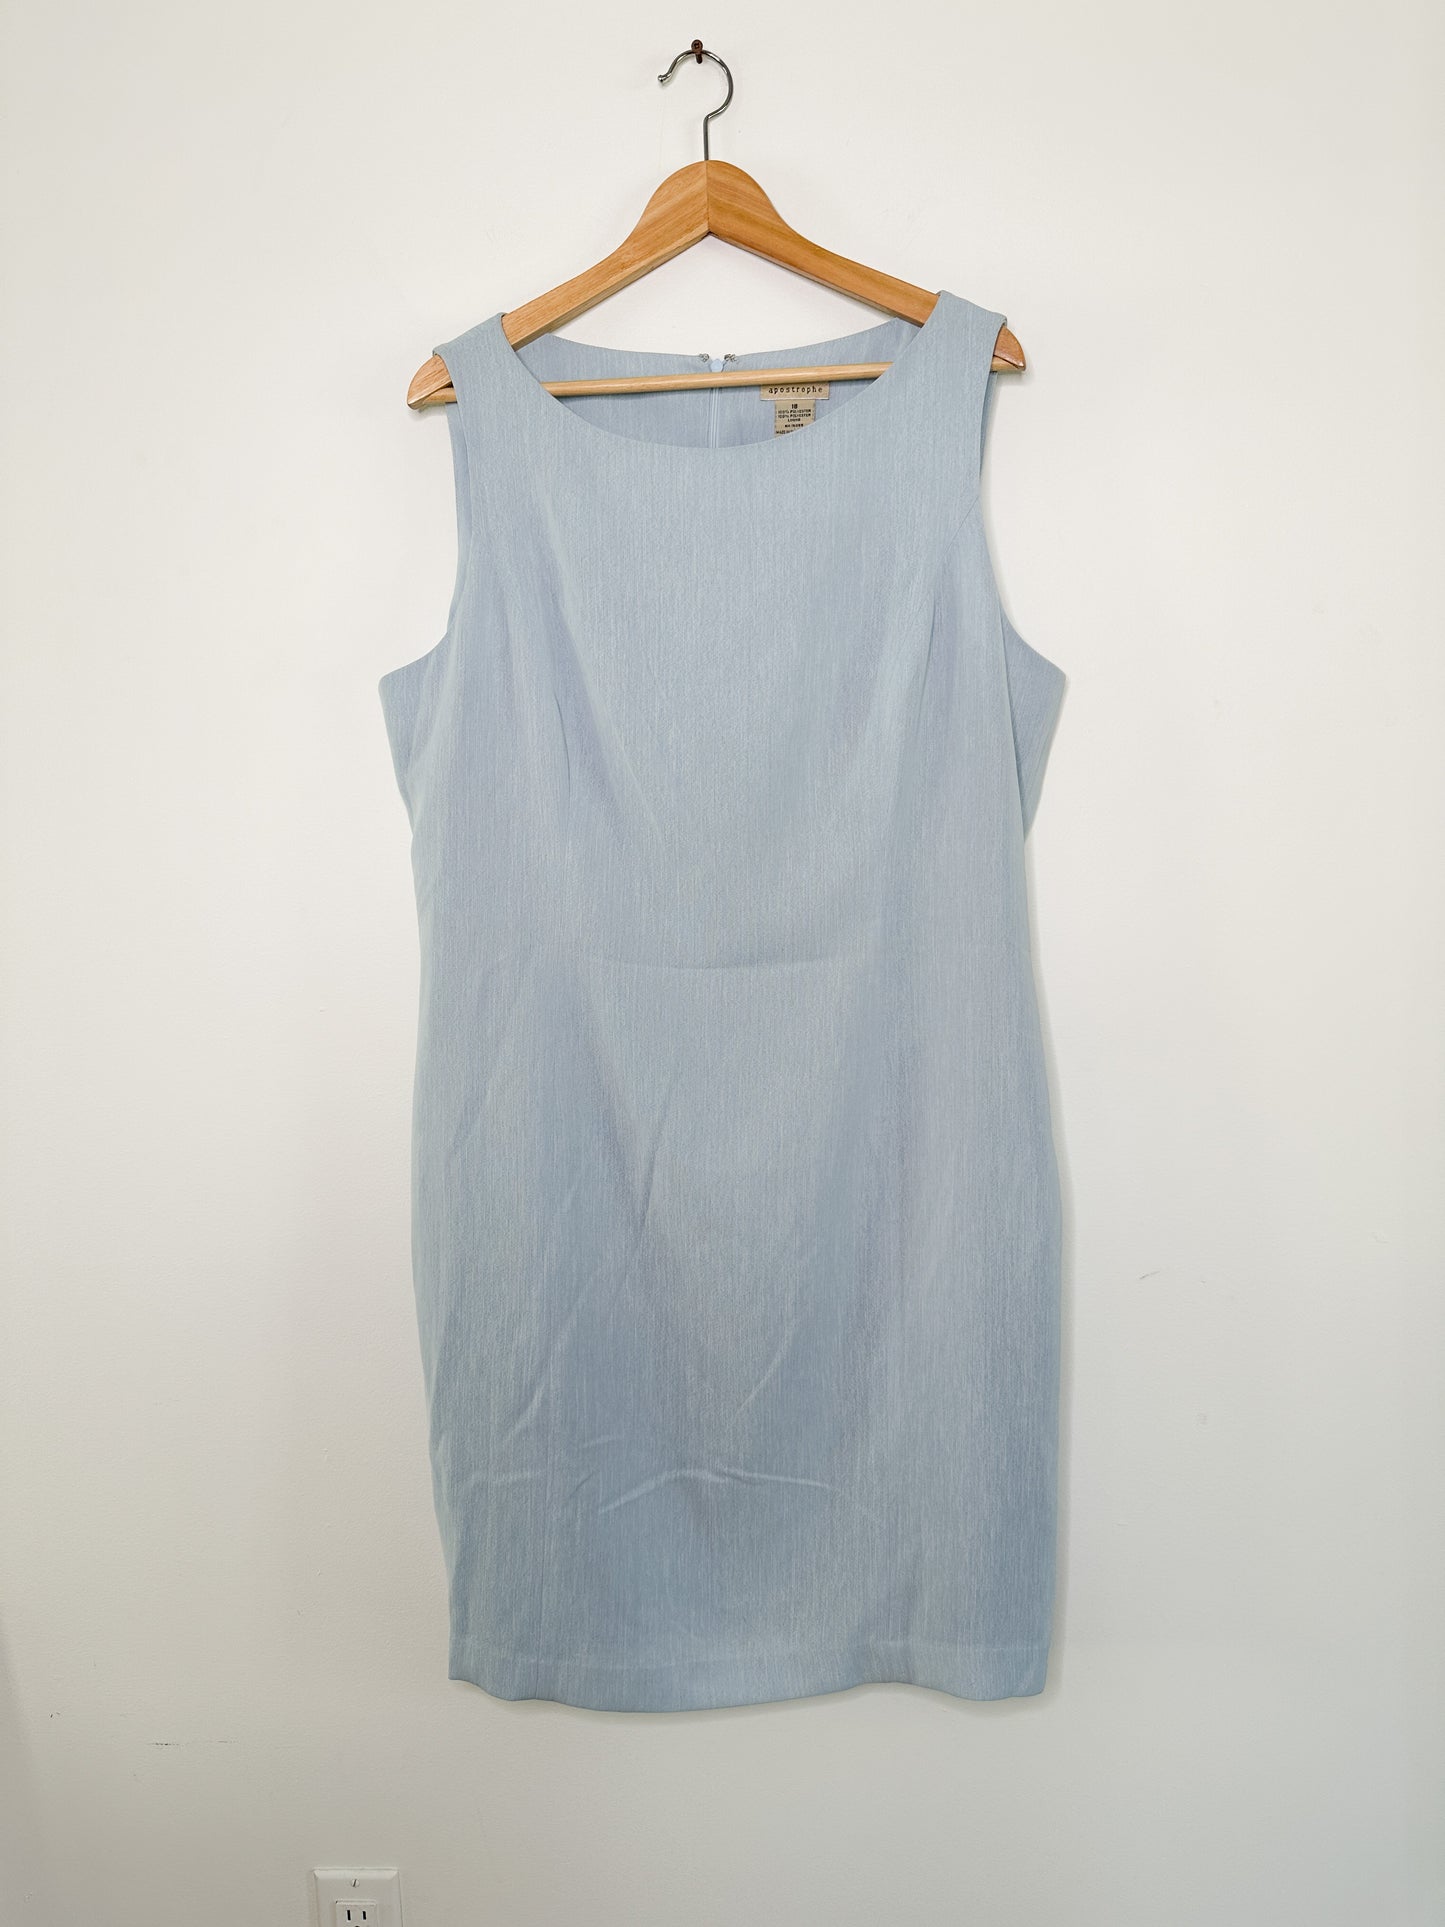 Vintage Apostrophe  Structured Dress | Plus Size sleeveless blouse